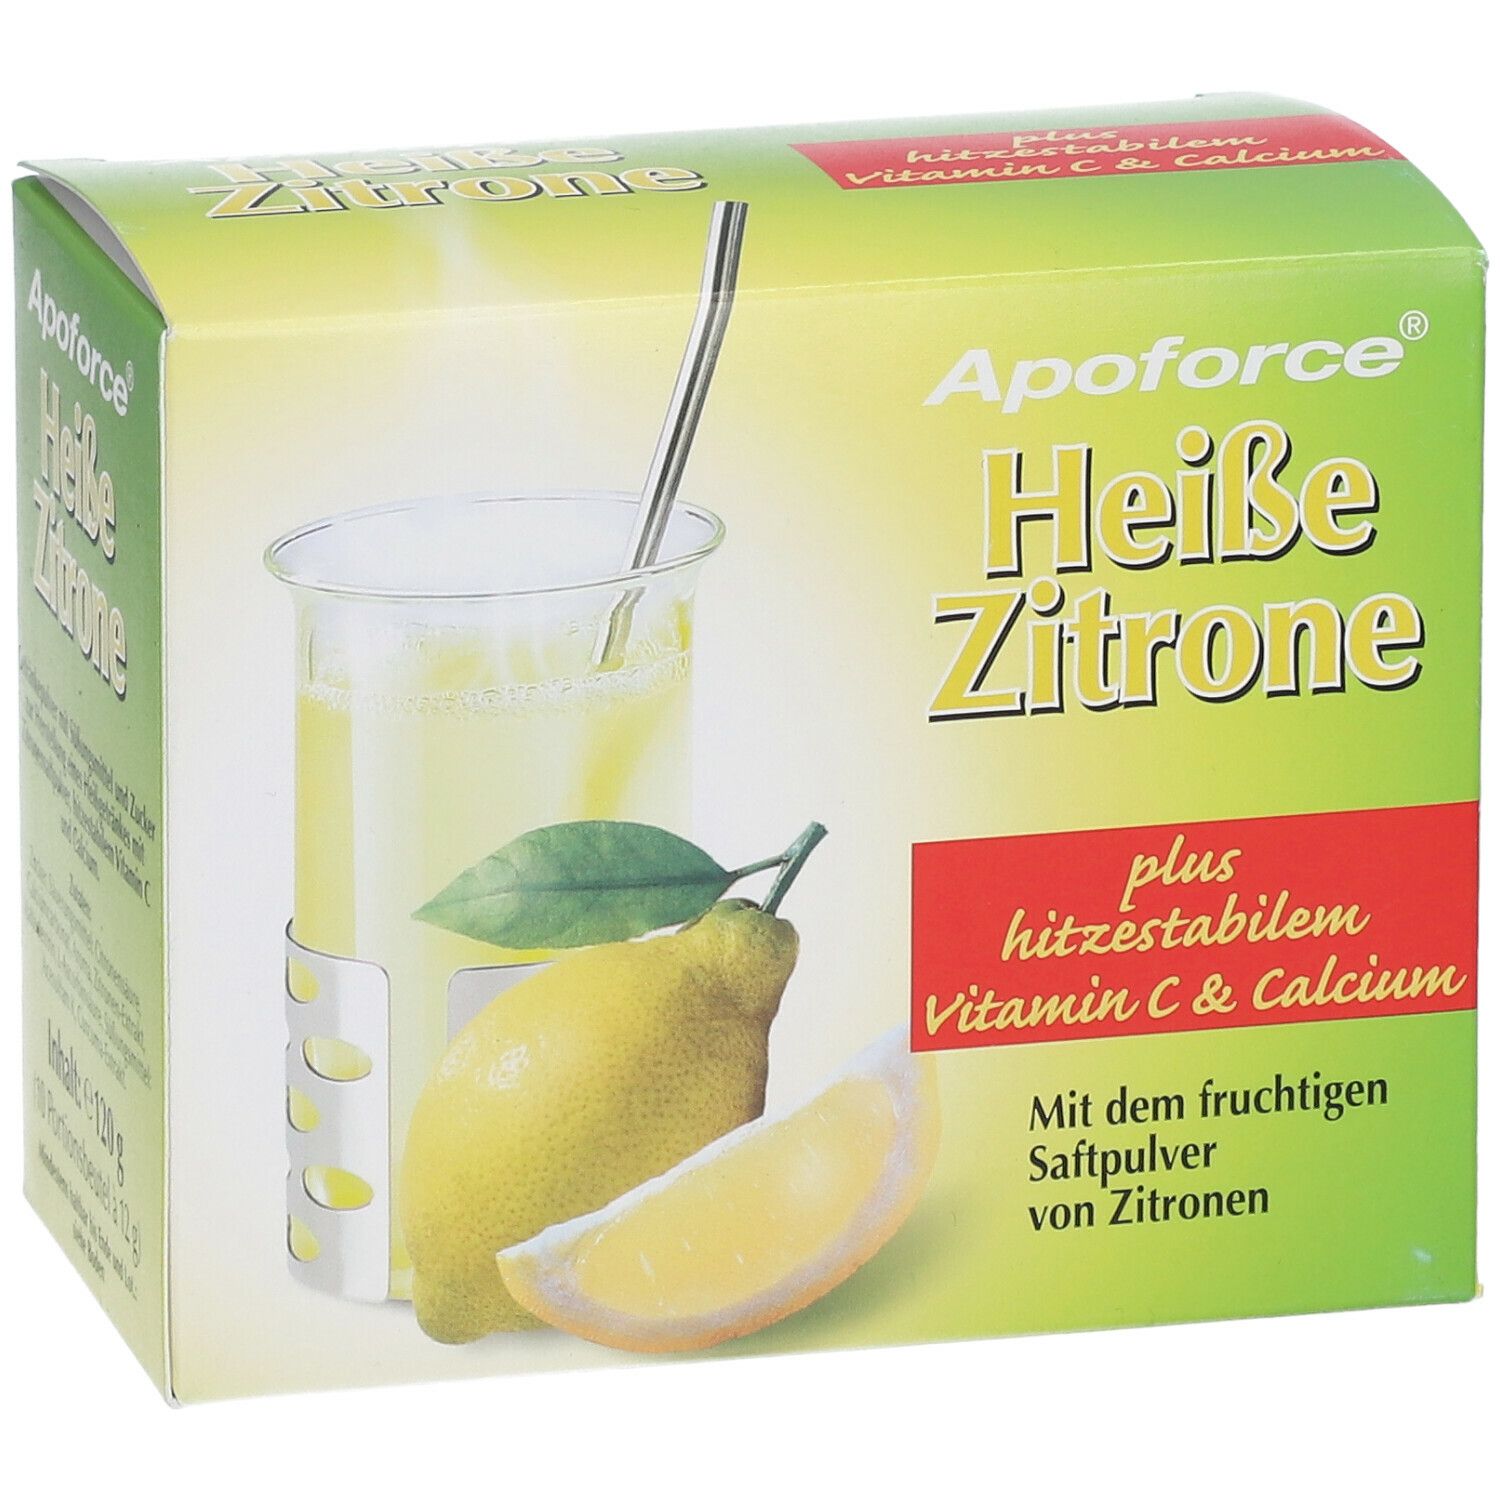 Apoforce® Heiße Zitrone